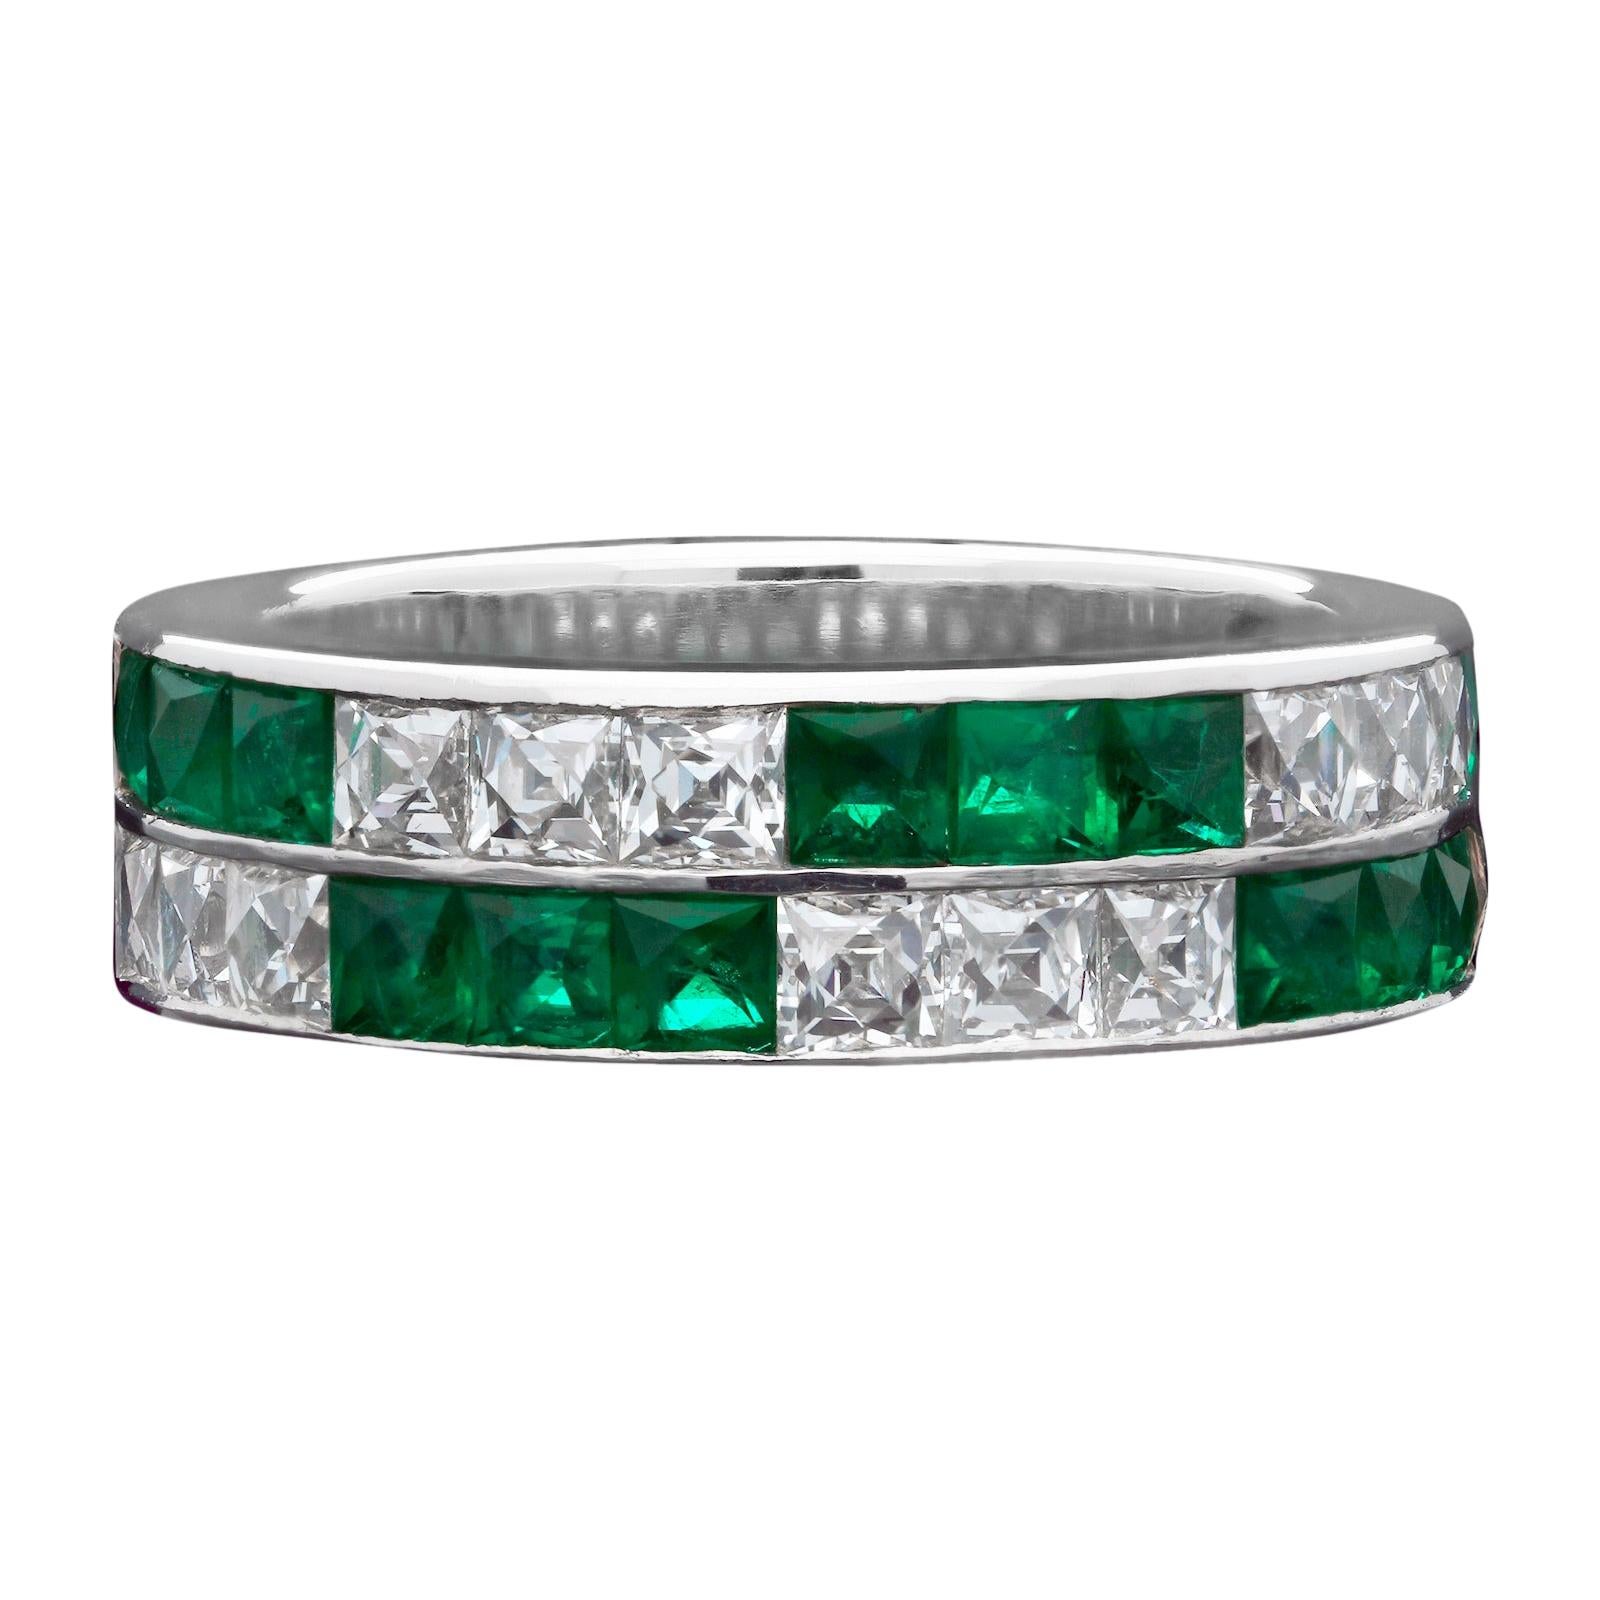 Hancocks Unusual French-Cut Emerald and Diamond 2-Row Eternity or Wedding Ring